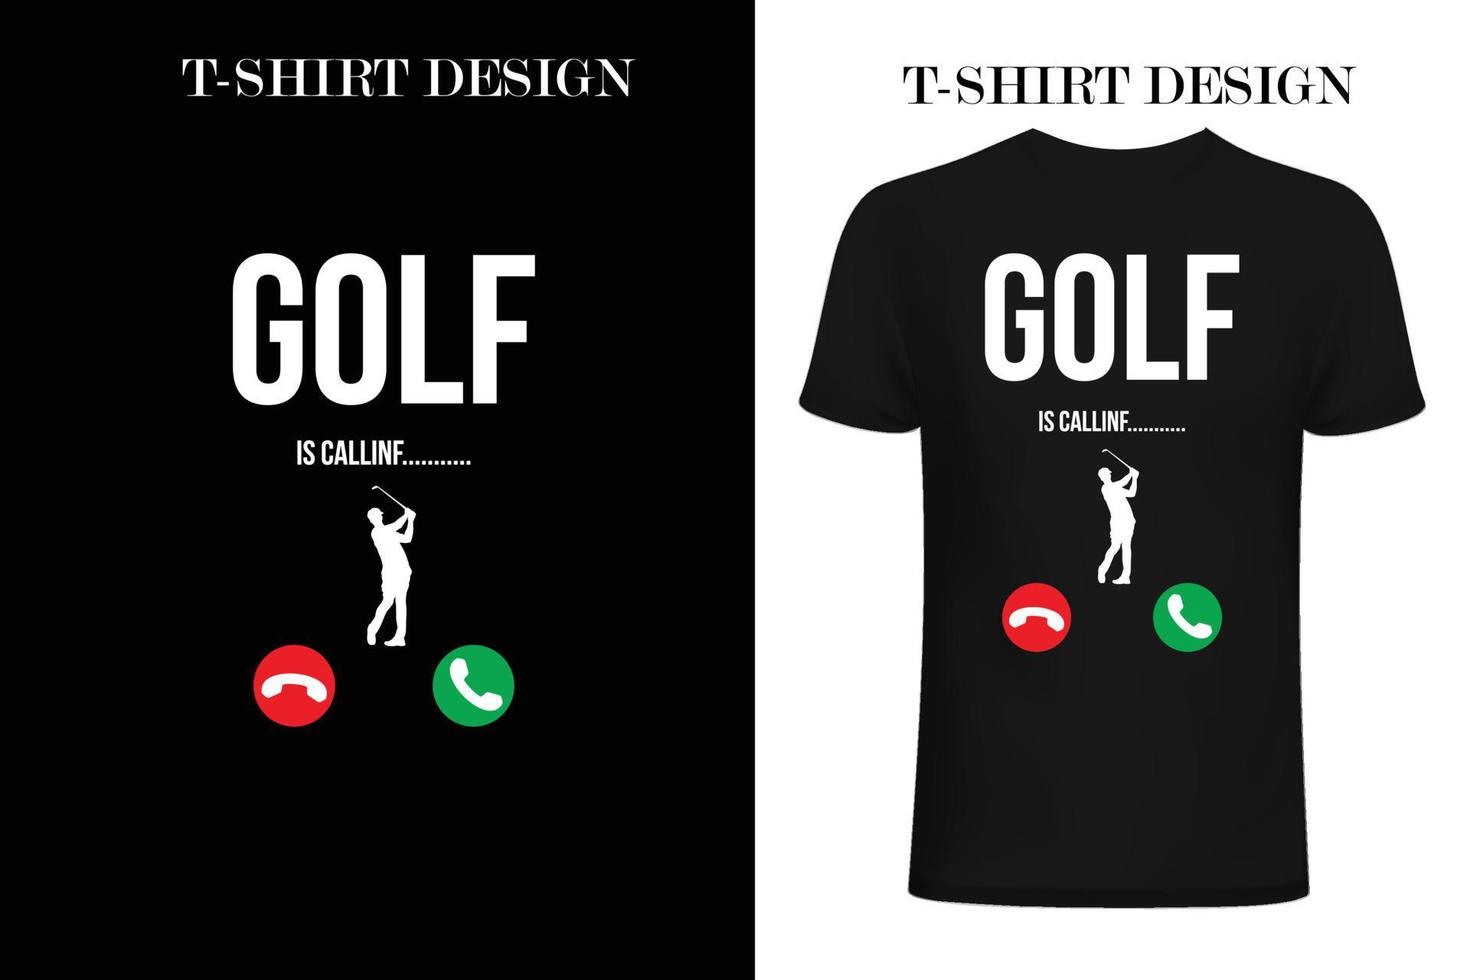 diseño de camiseta de golf. diseño de camiseta vintage de golf. diseño de camisetas con citas de golf. vector